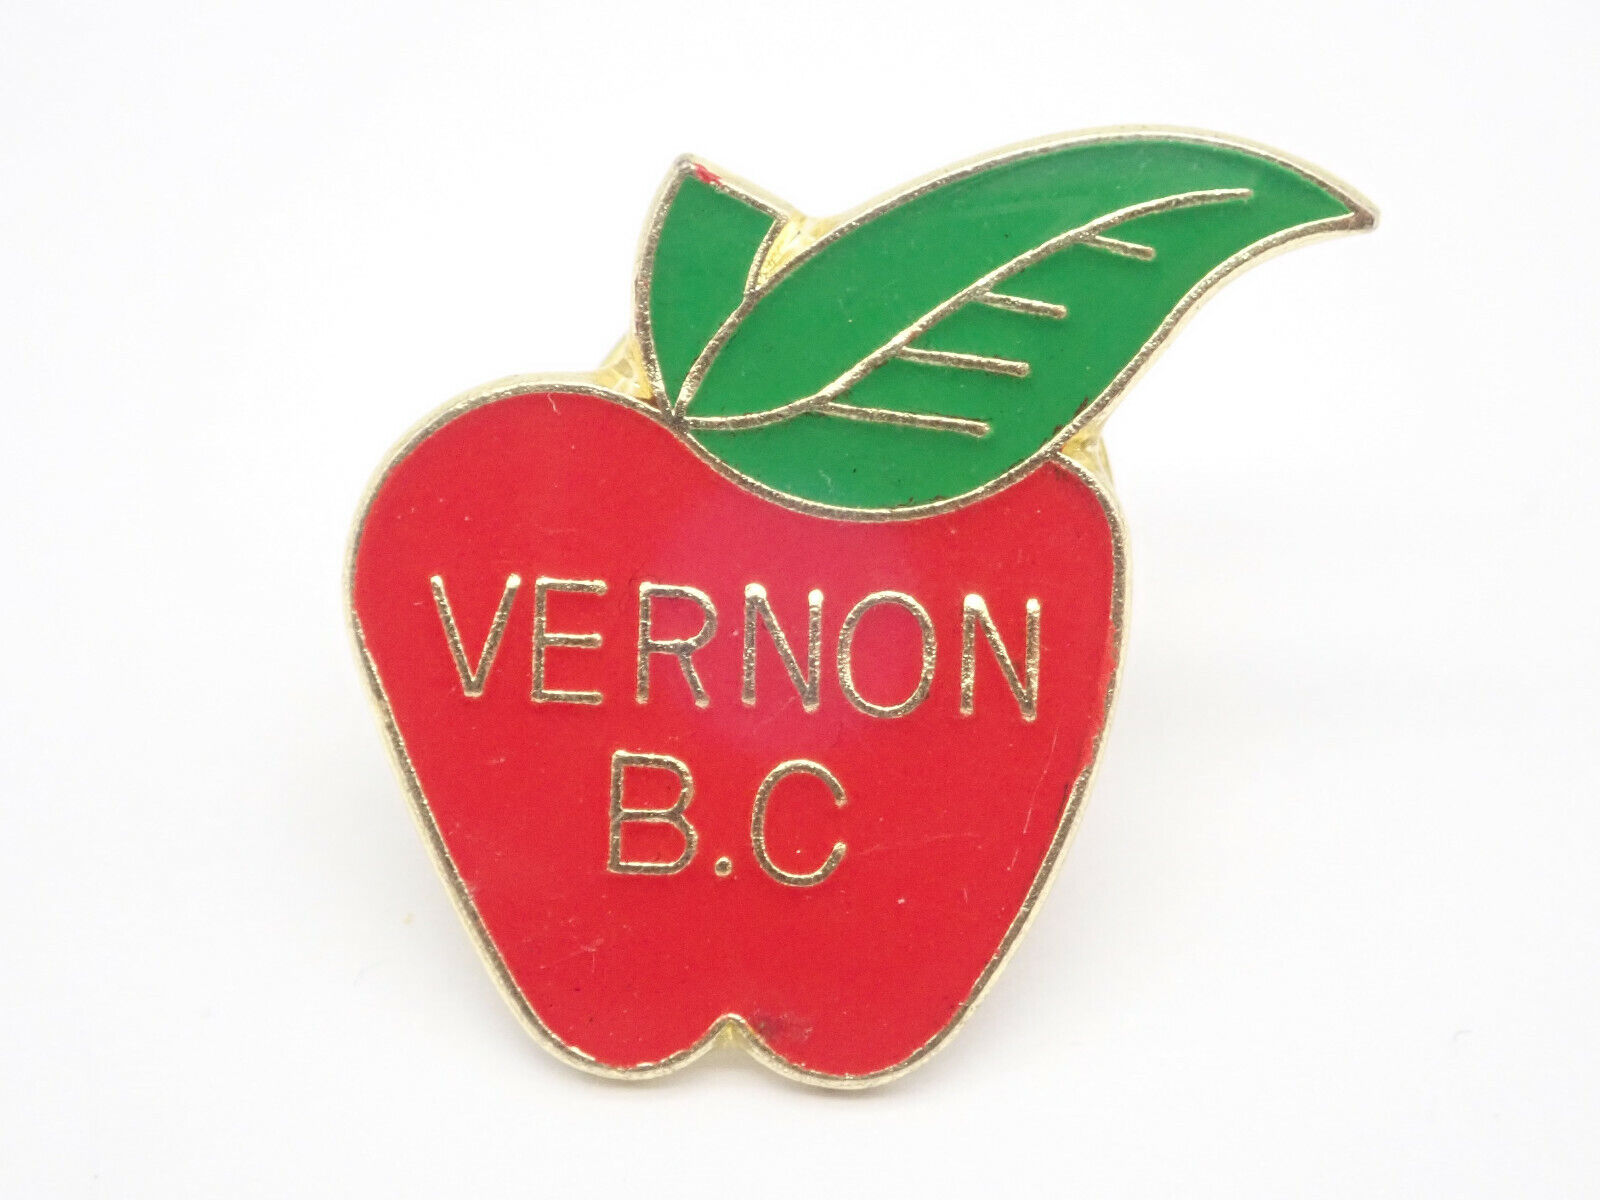 Vernon B.C. Red Apple Vintage Lapel Pin